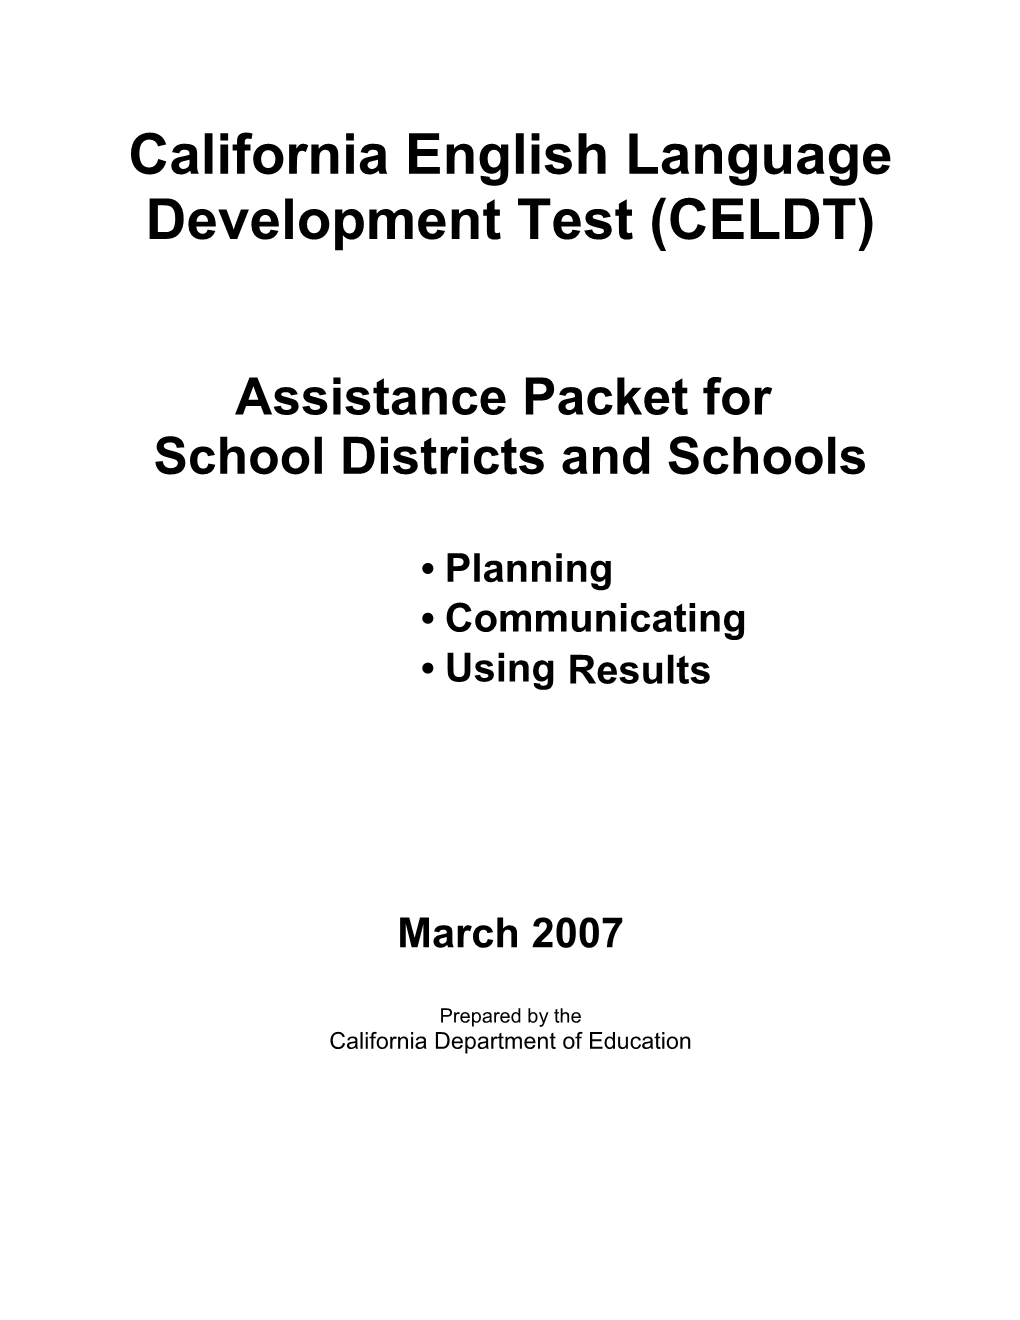 CELDT 07 Assistance Packet - California English Language Development Test (CA Department